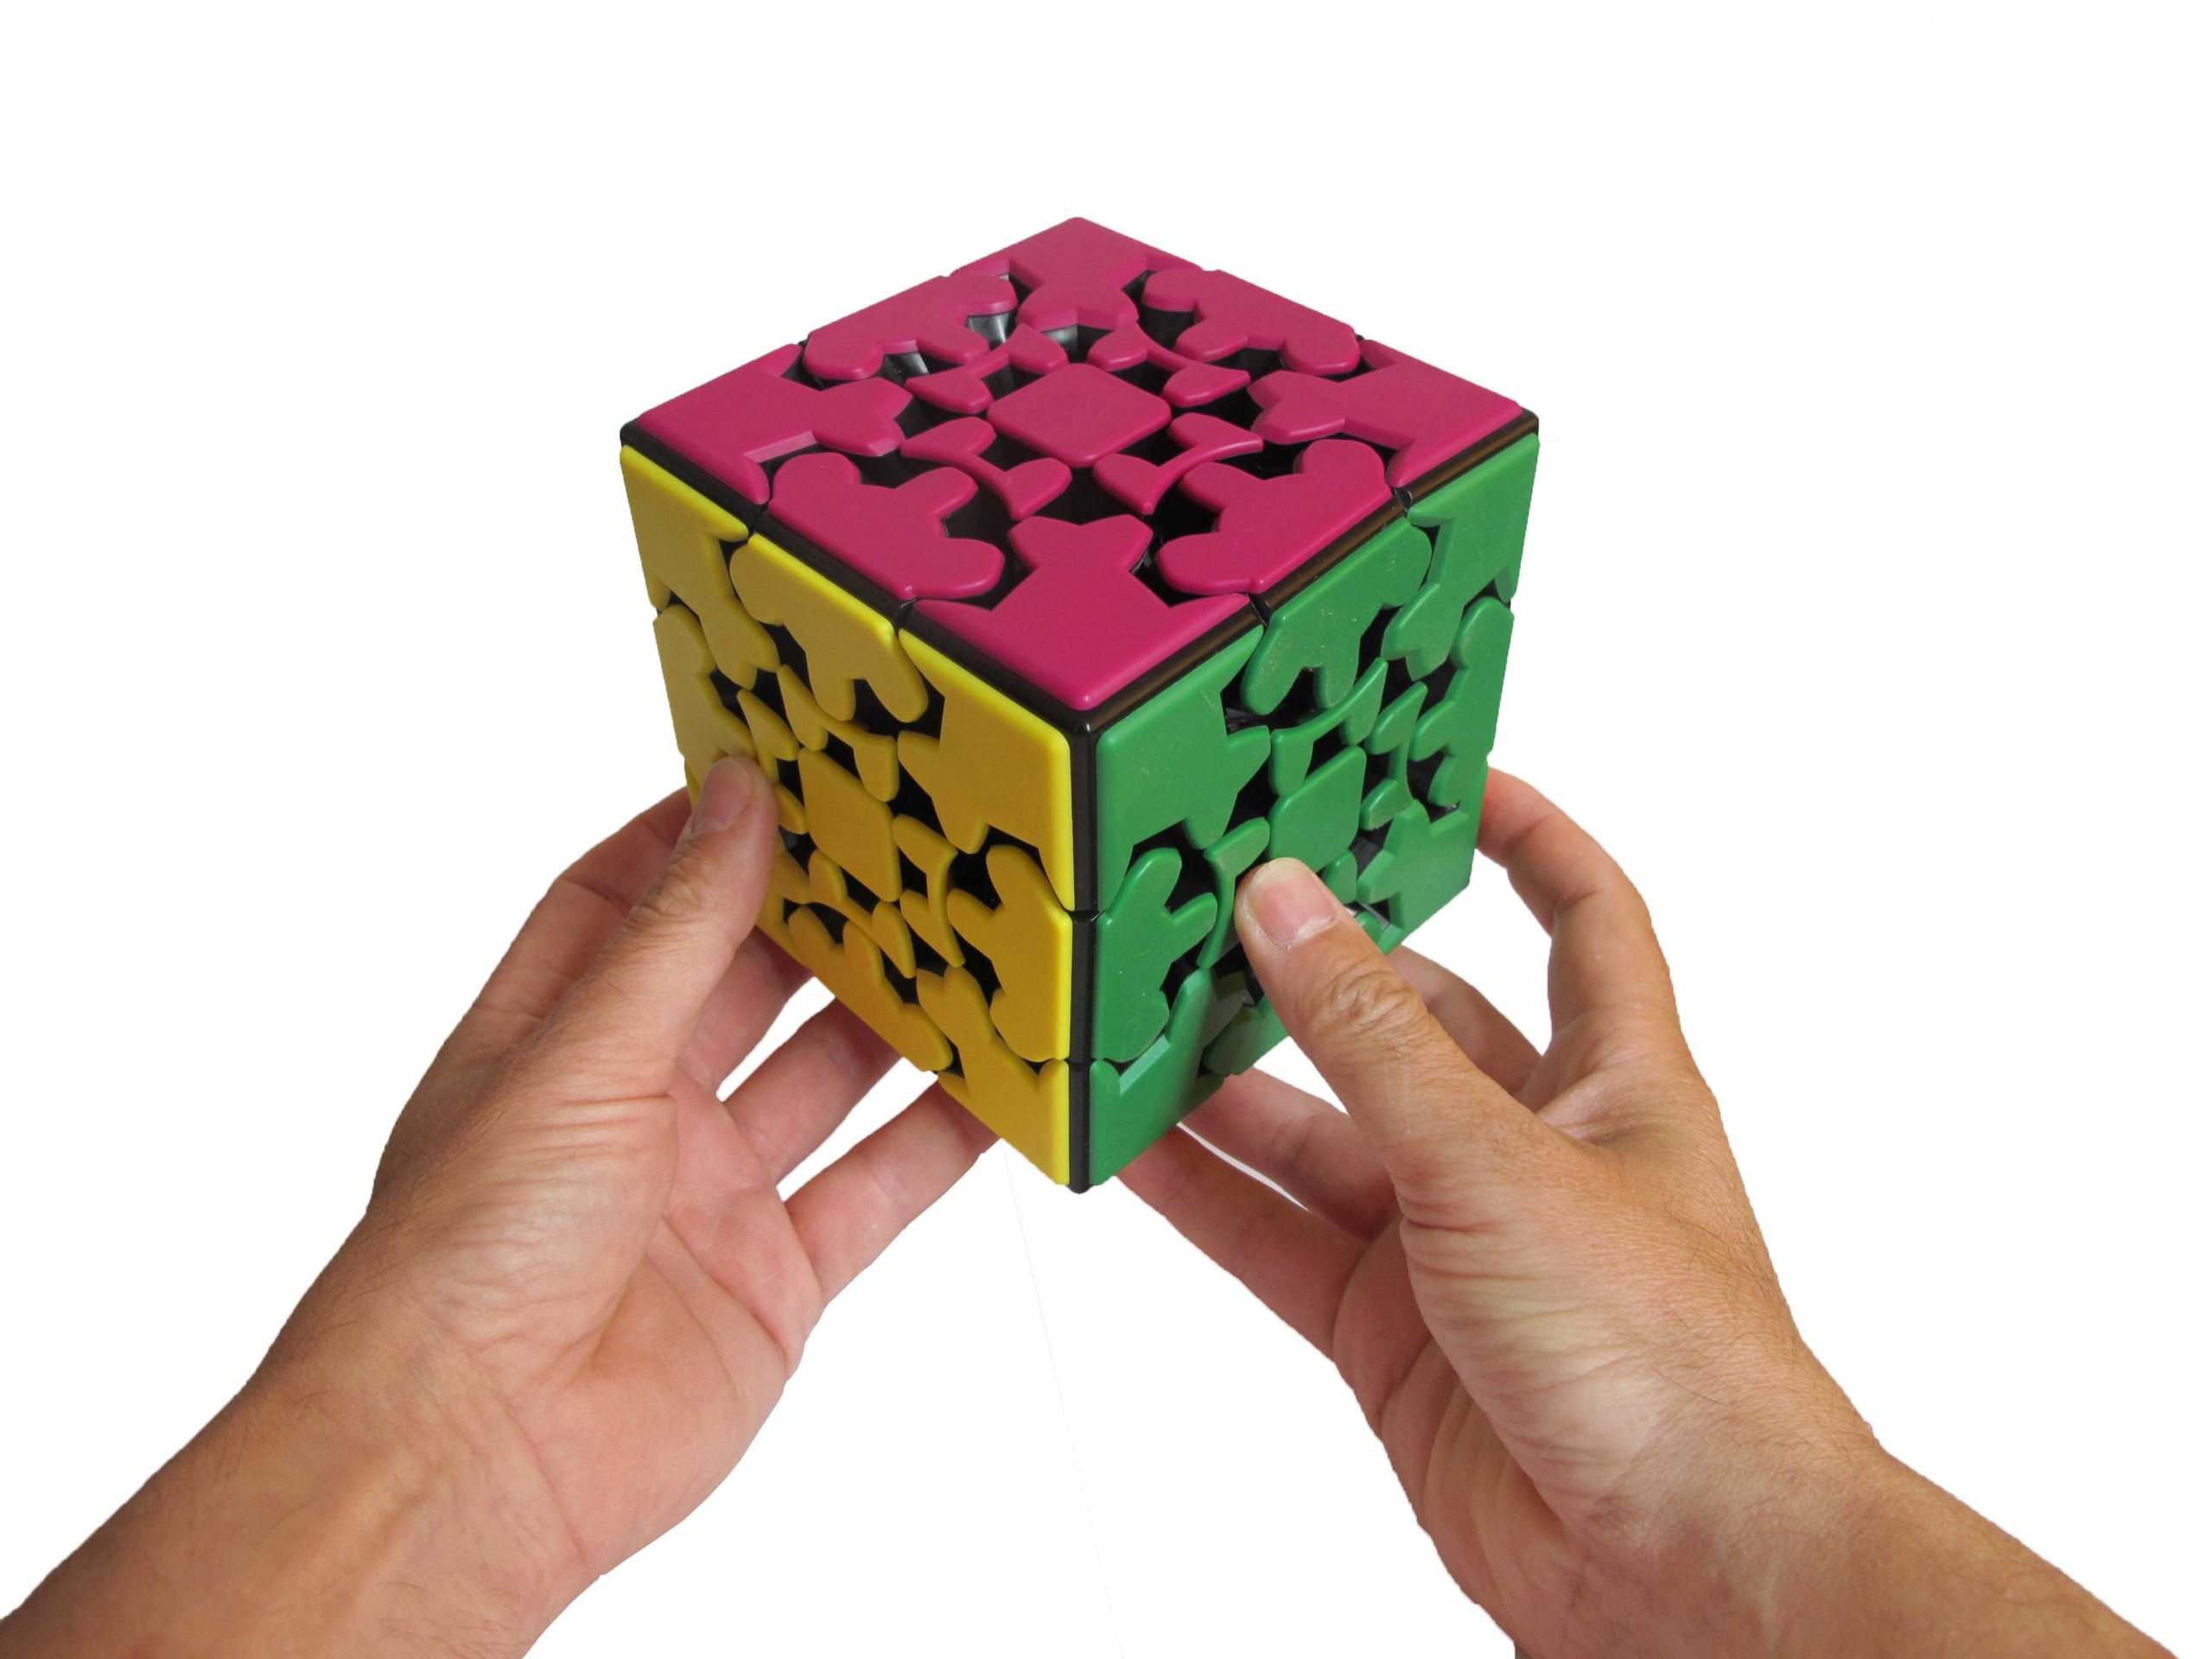 XXL Gear cube